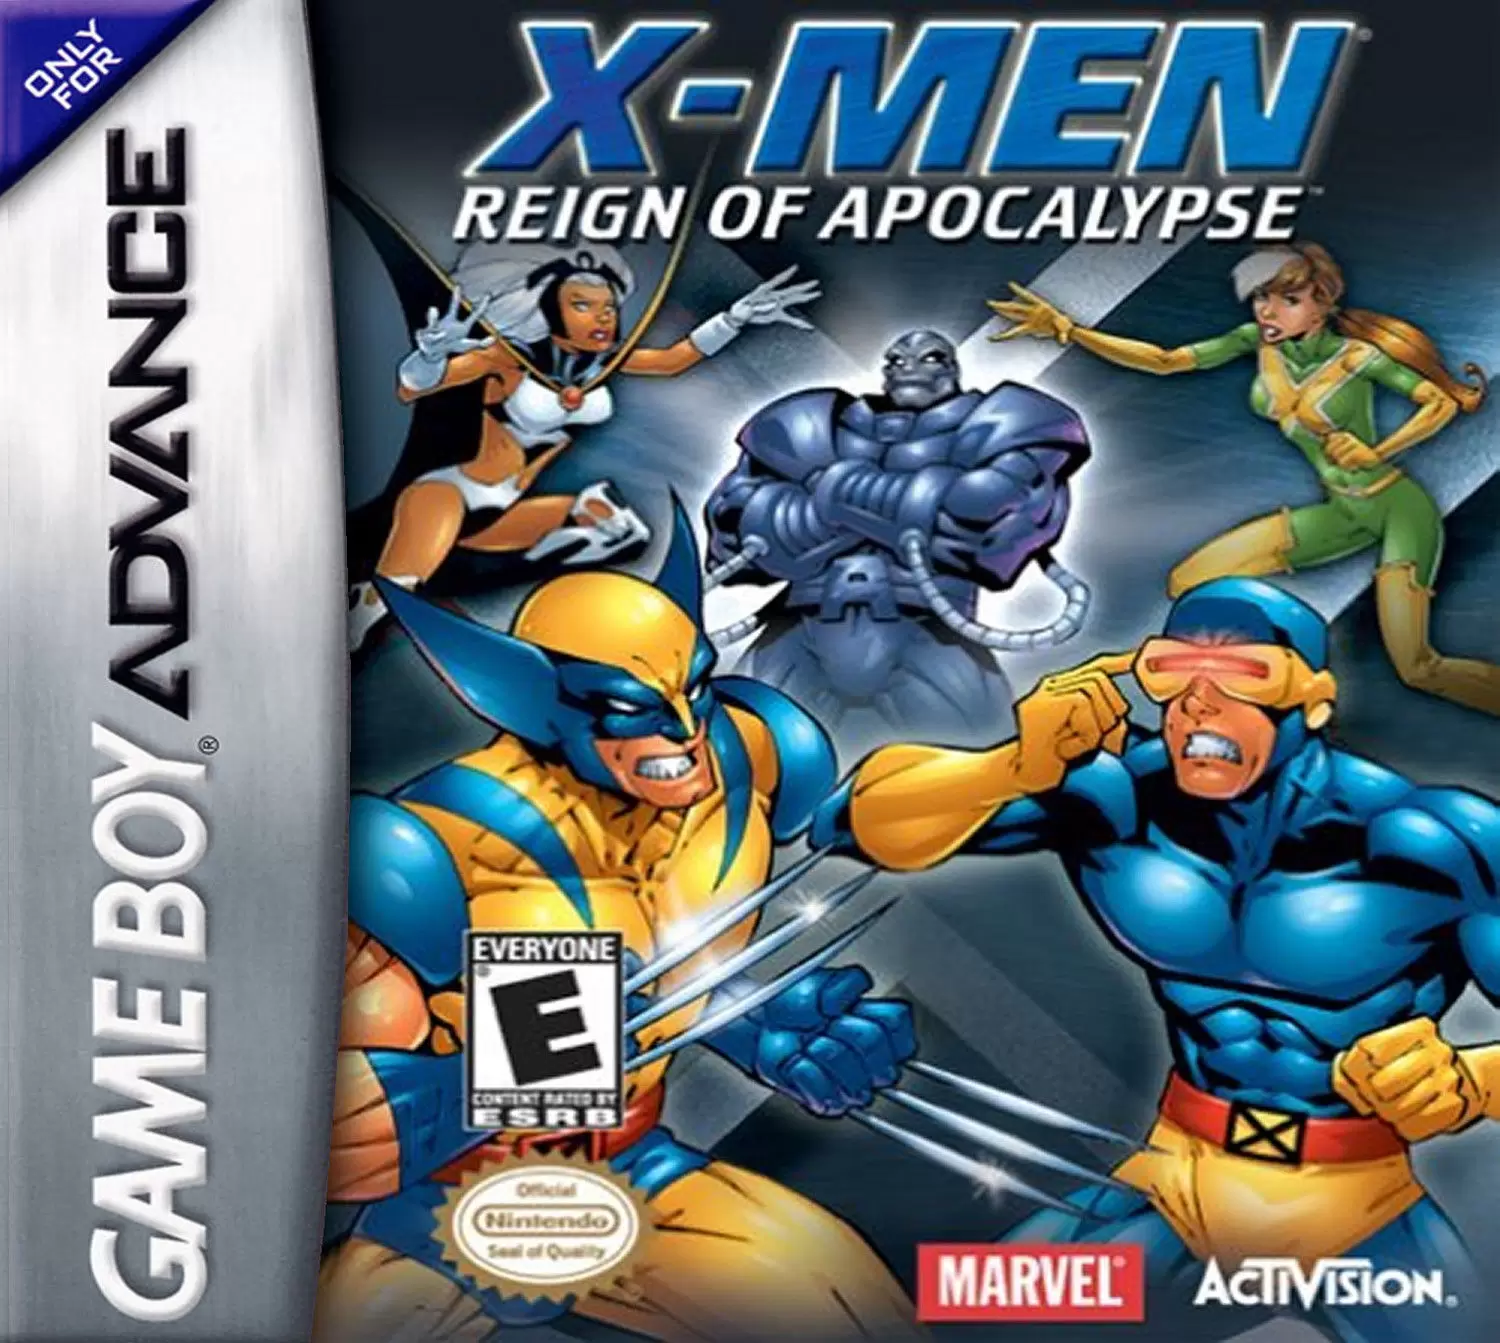 Game Boy Advance Games - X-Men: Reign of Apocalypse